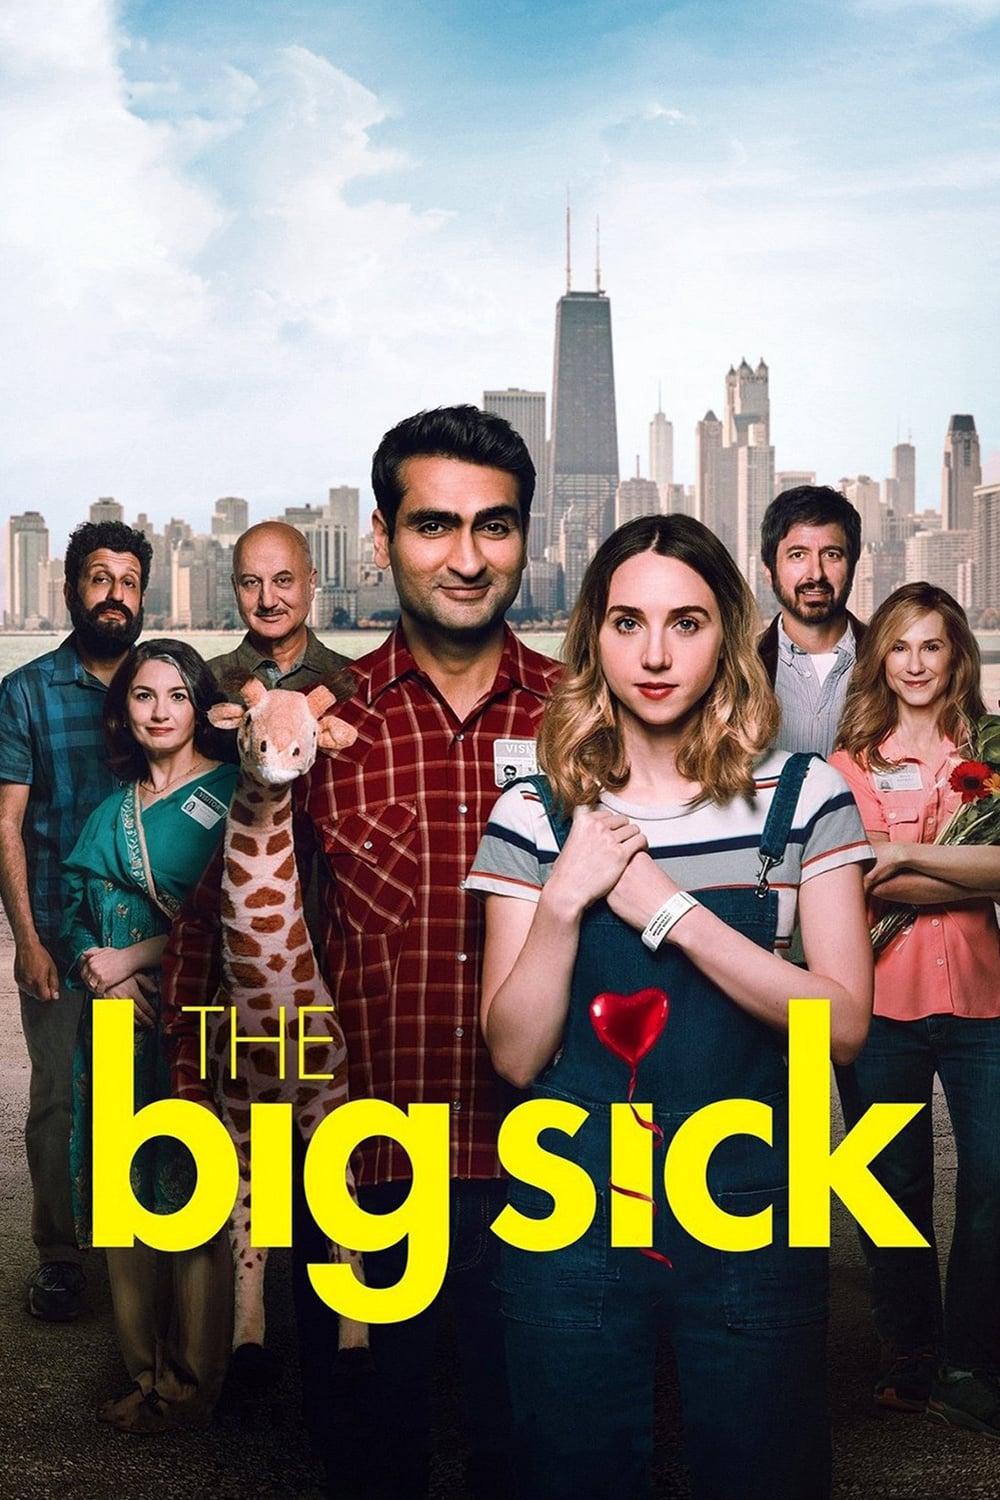 The Big Sick poster